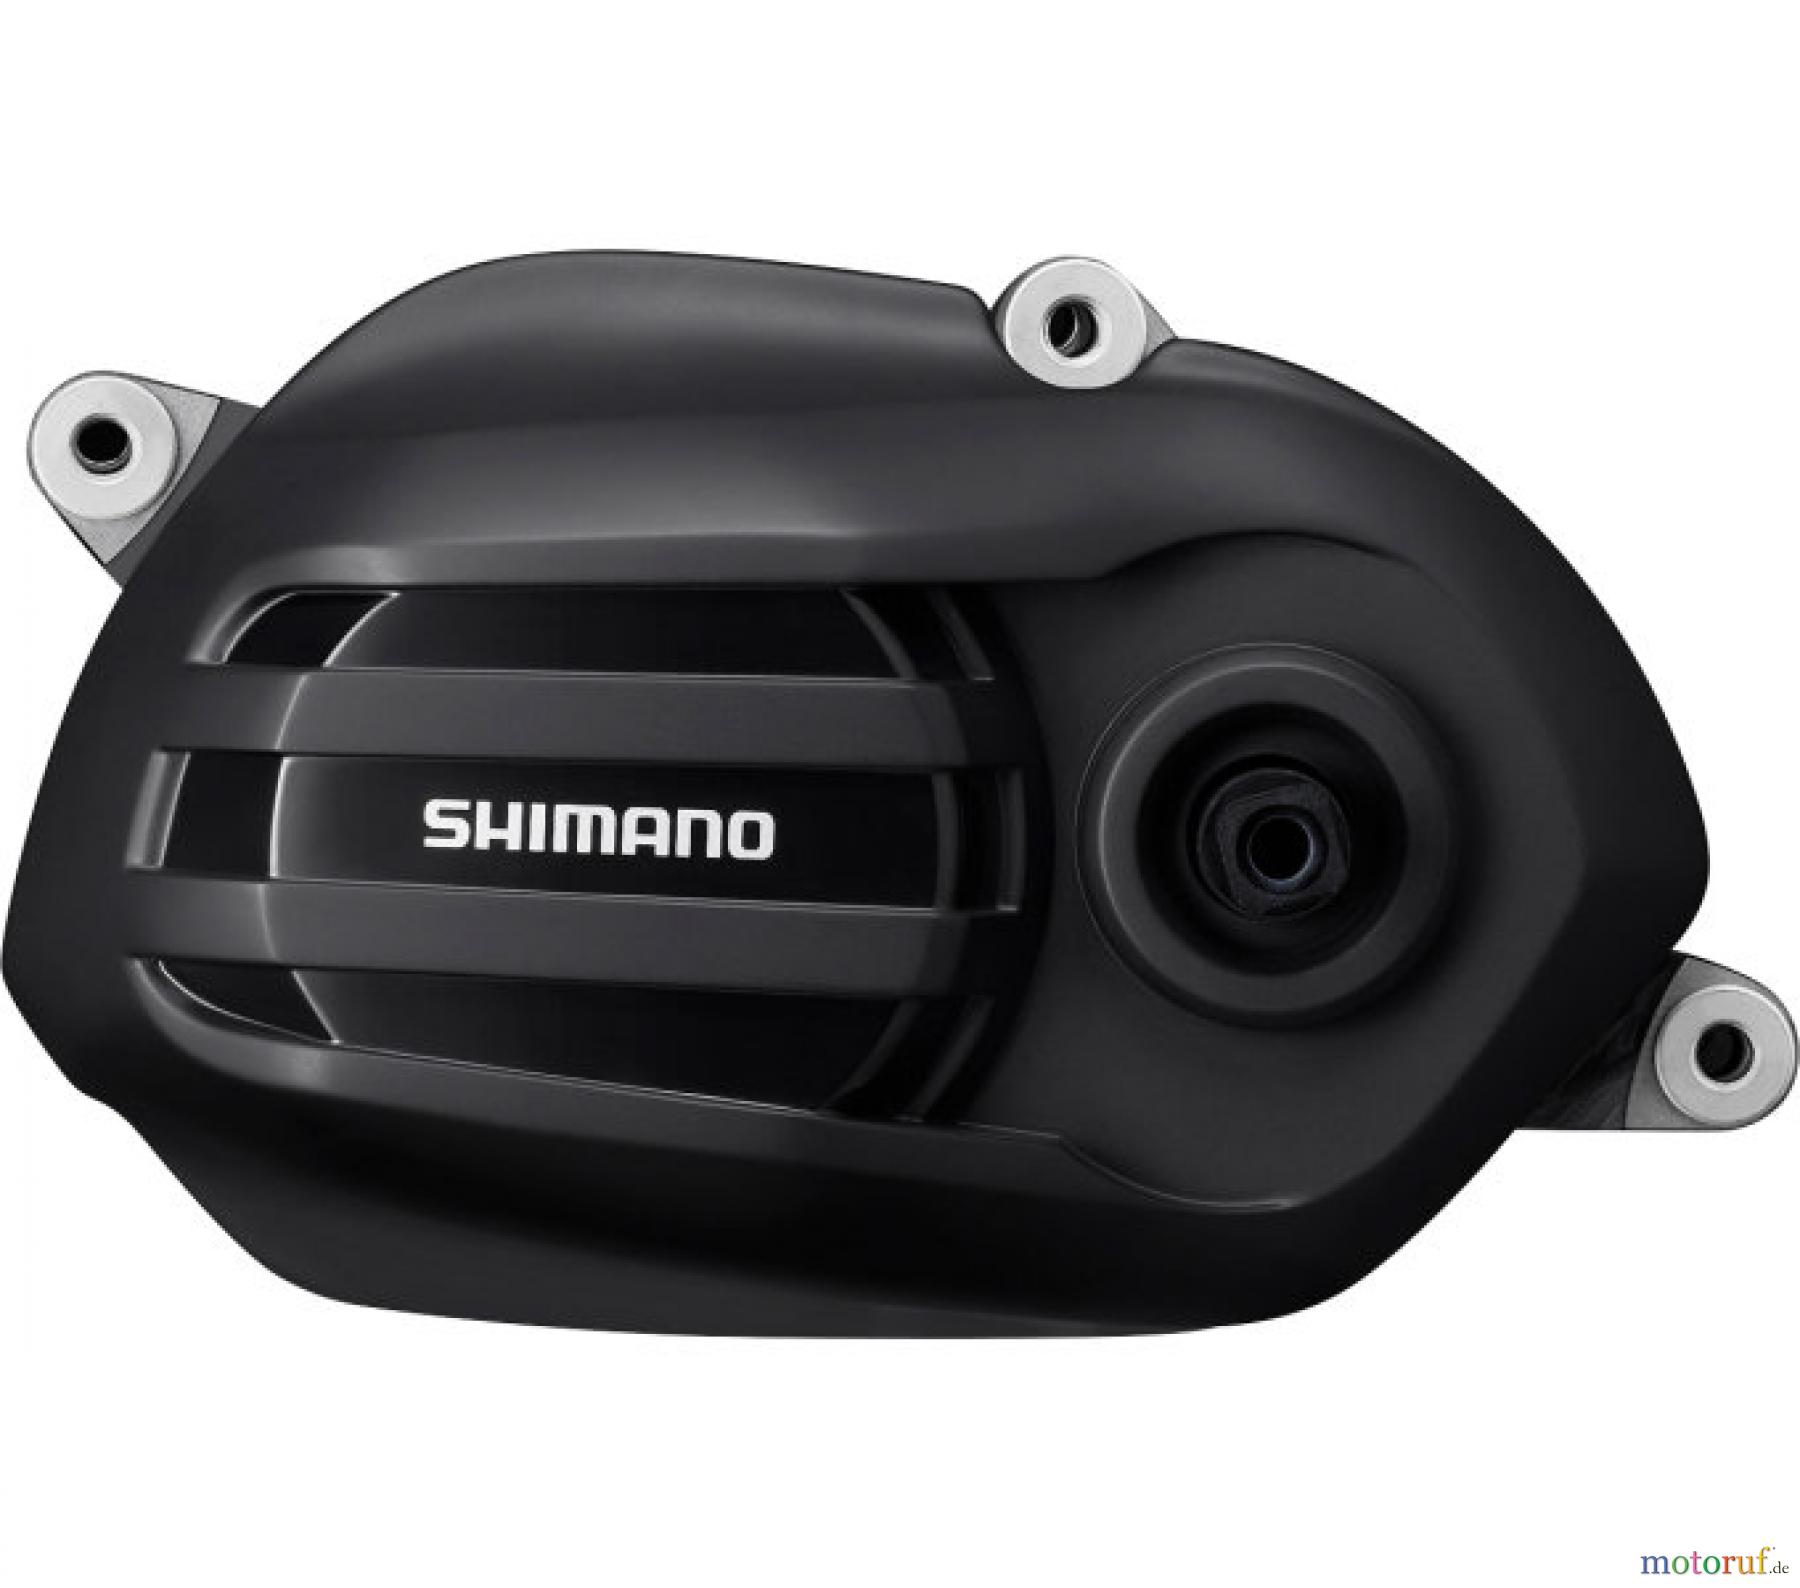  Shimano DU Drive Unit Antriebseinheit (E-Bike)